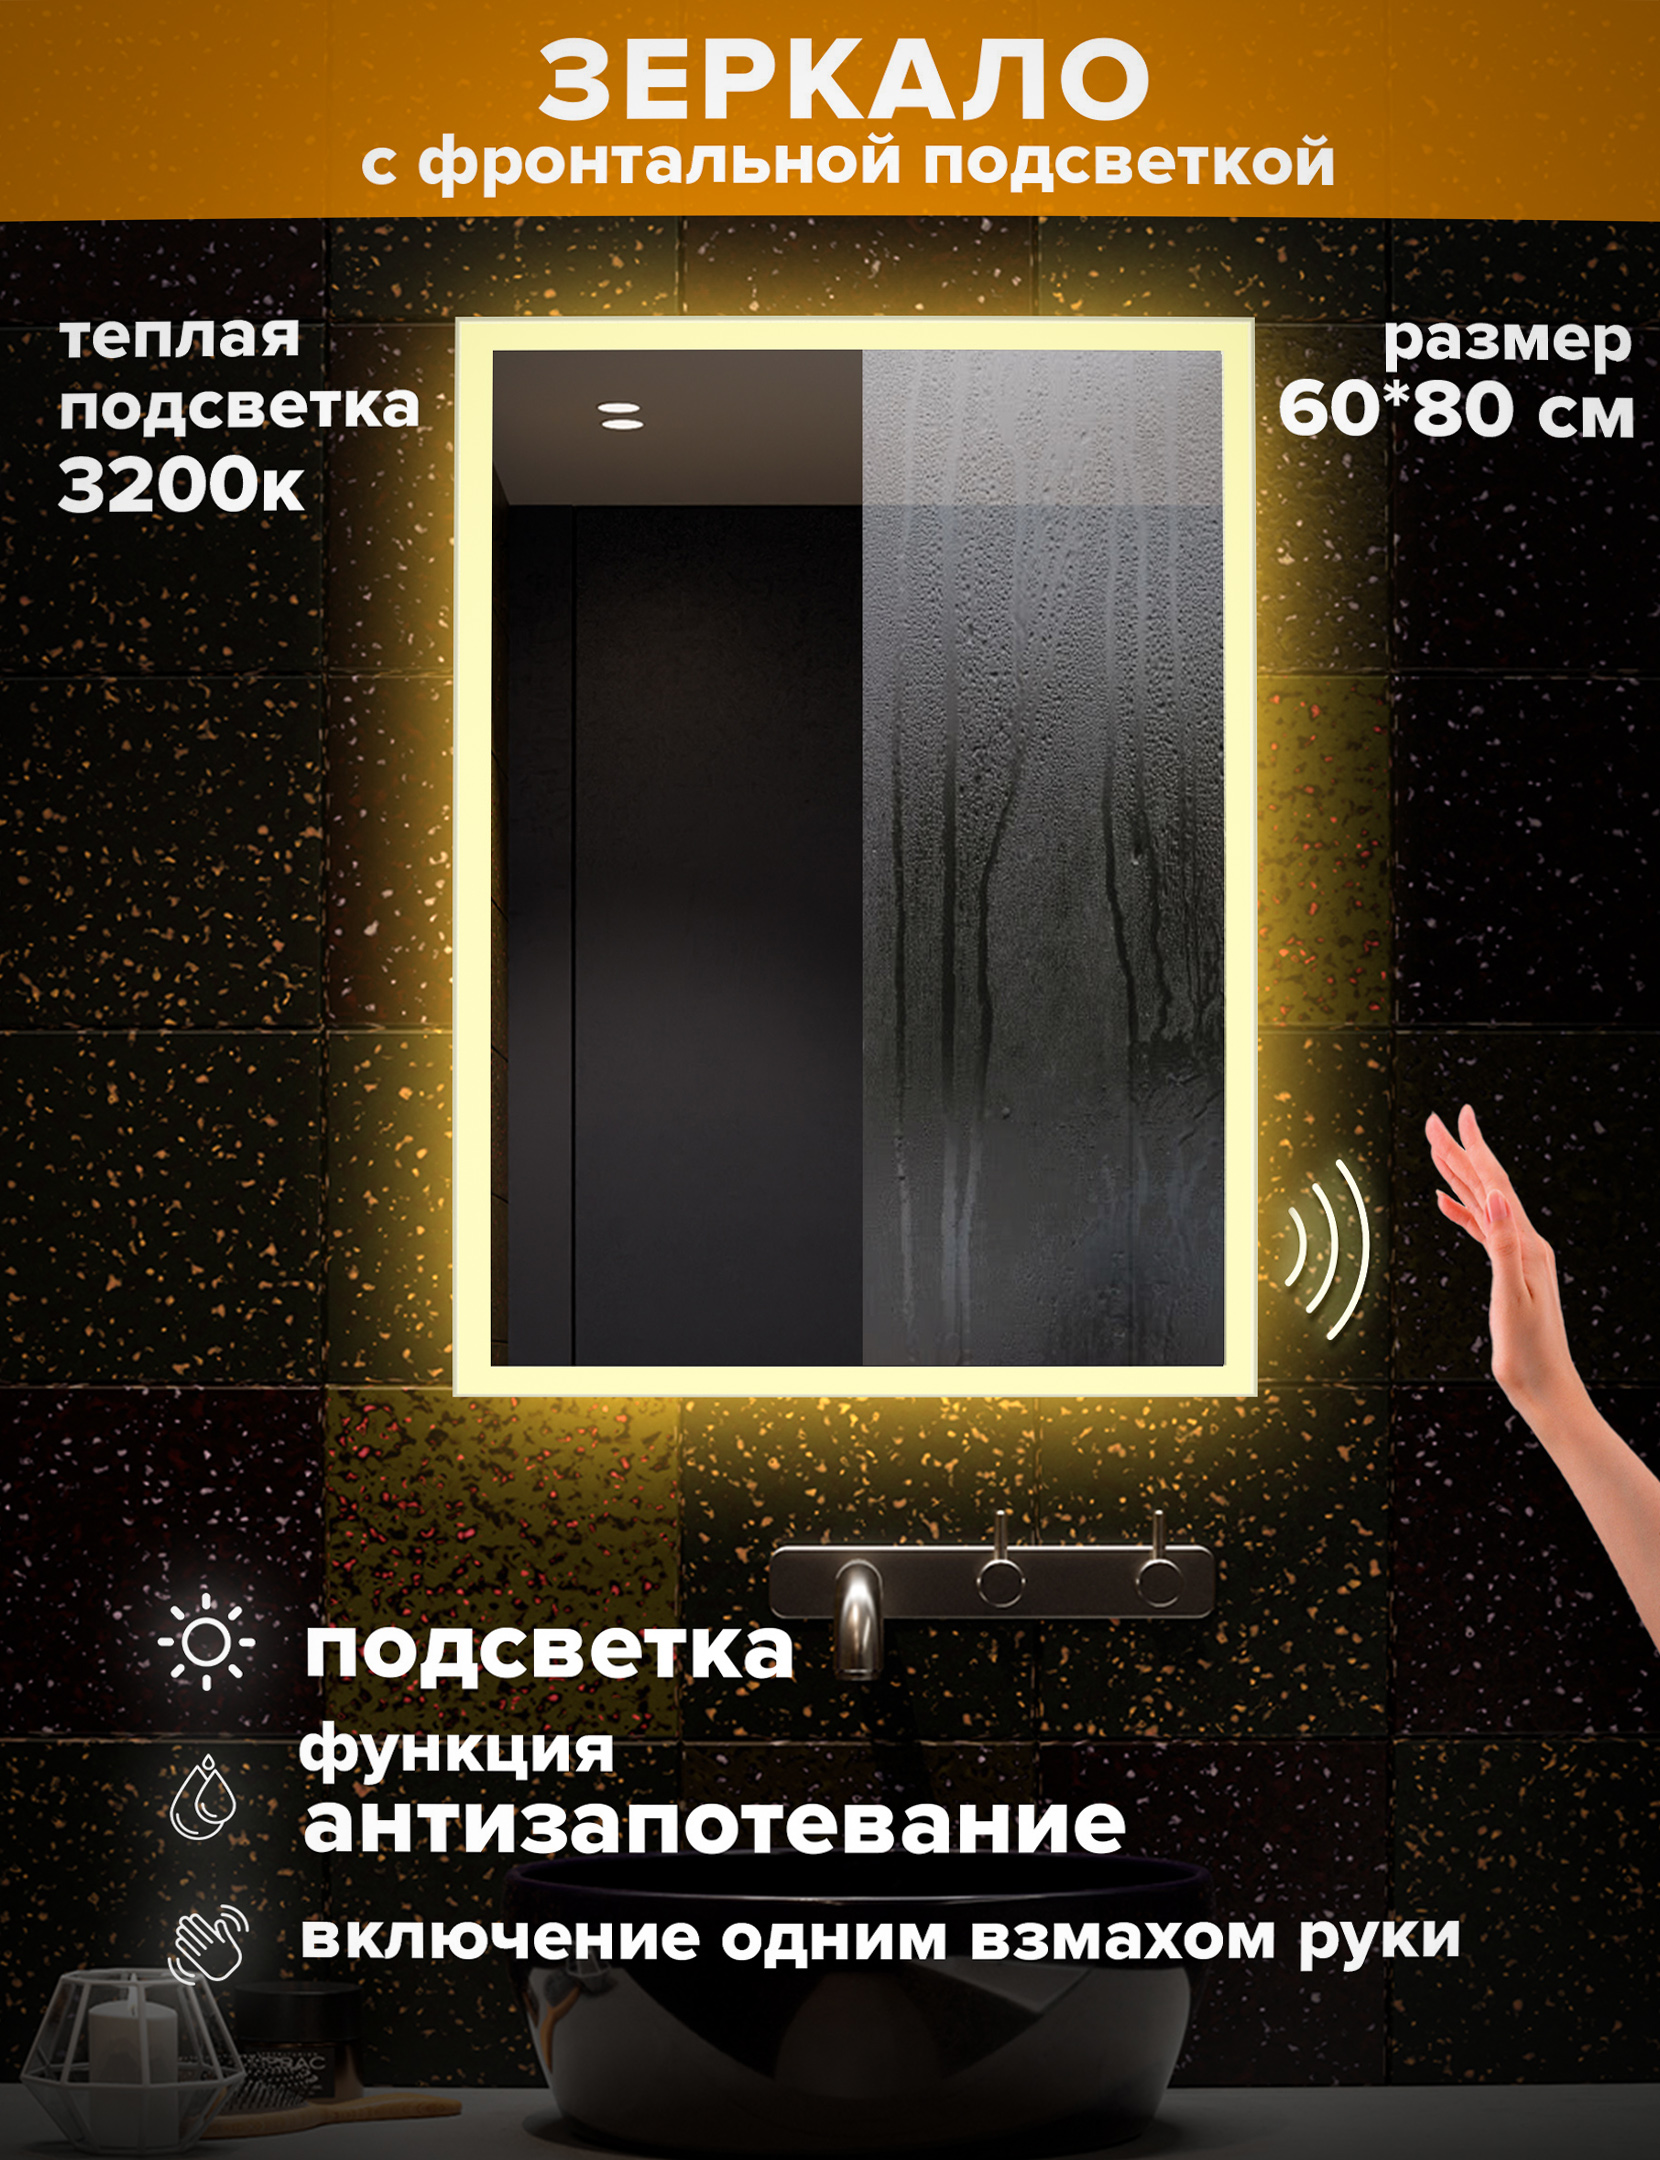 Зеркало для ванной Alfa Mirrors с теплой подсветкой 3200К, 60*80 см, обогрев, MNiko-68AVzt